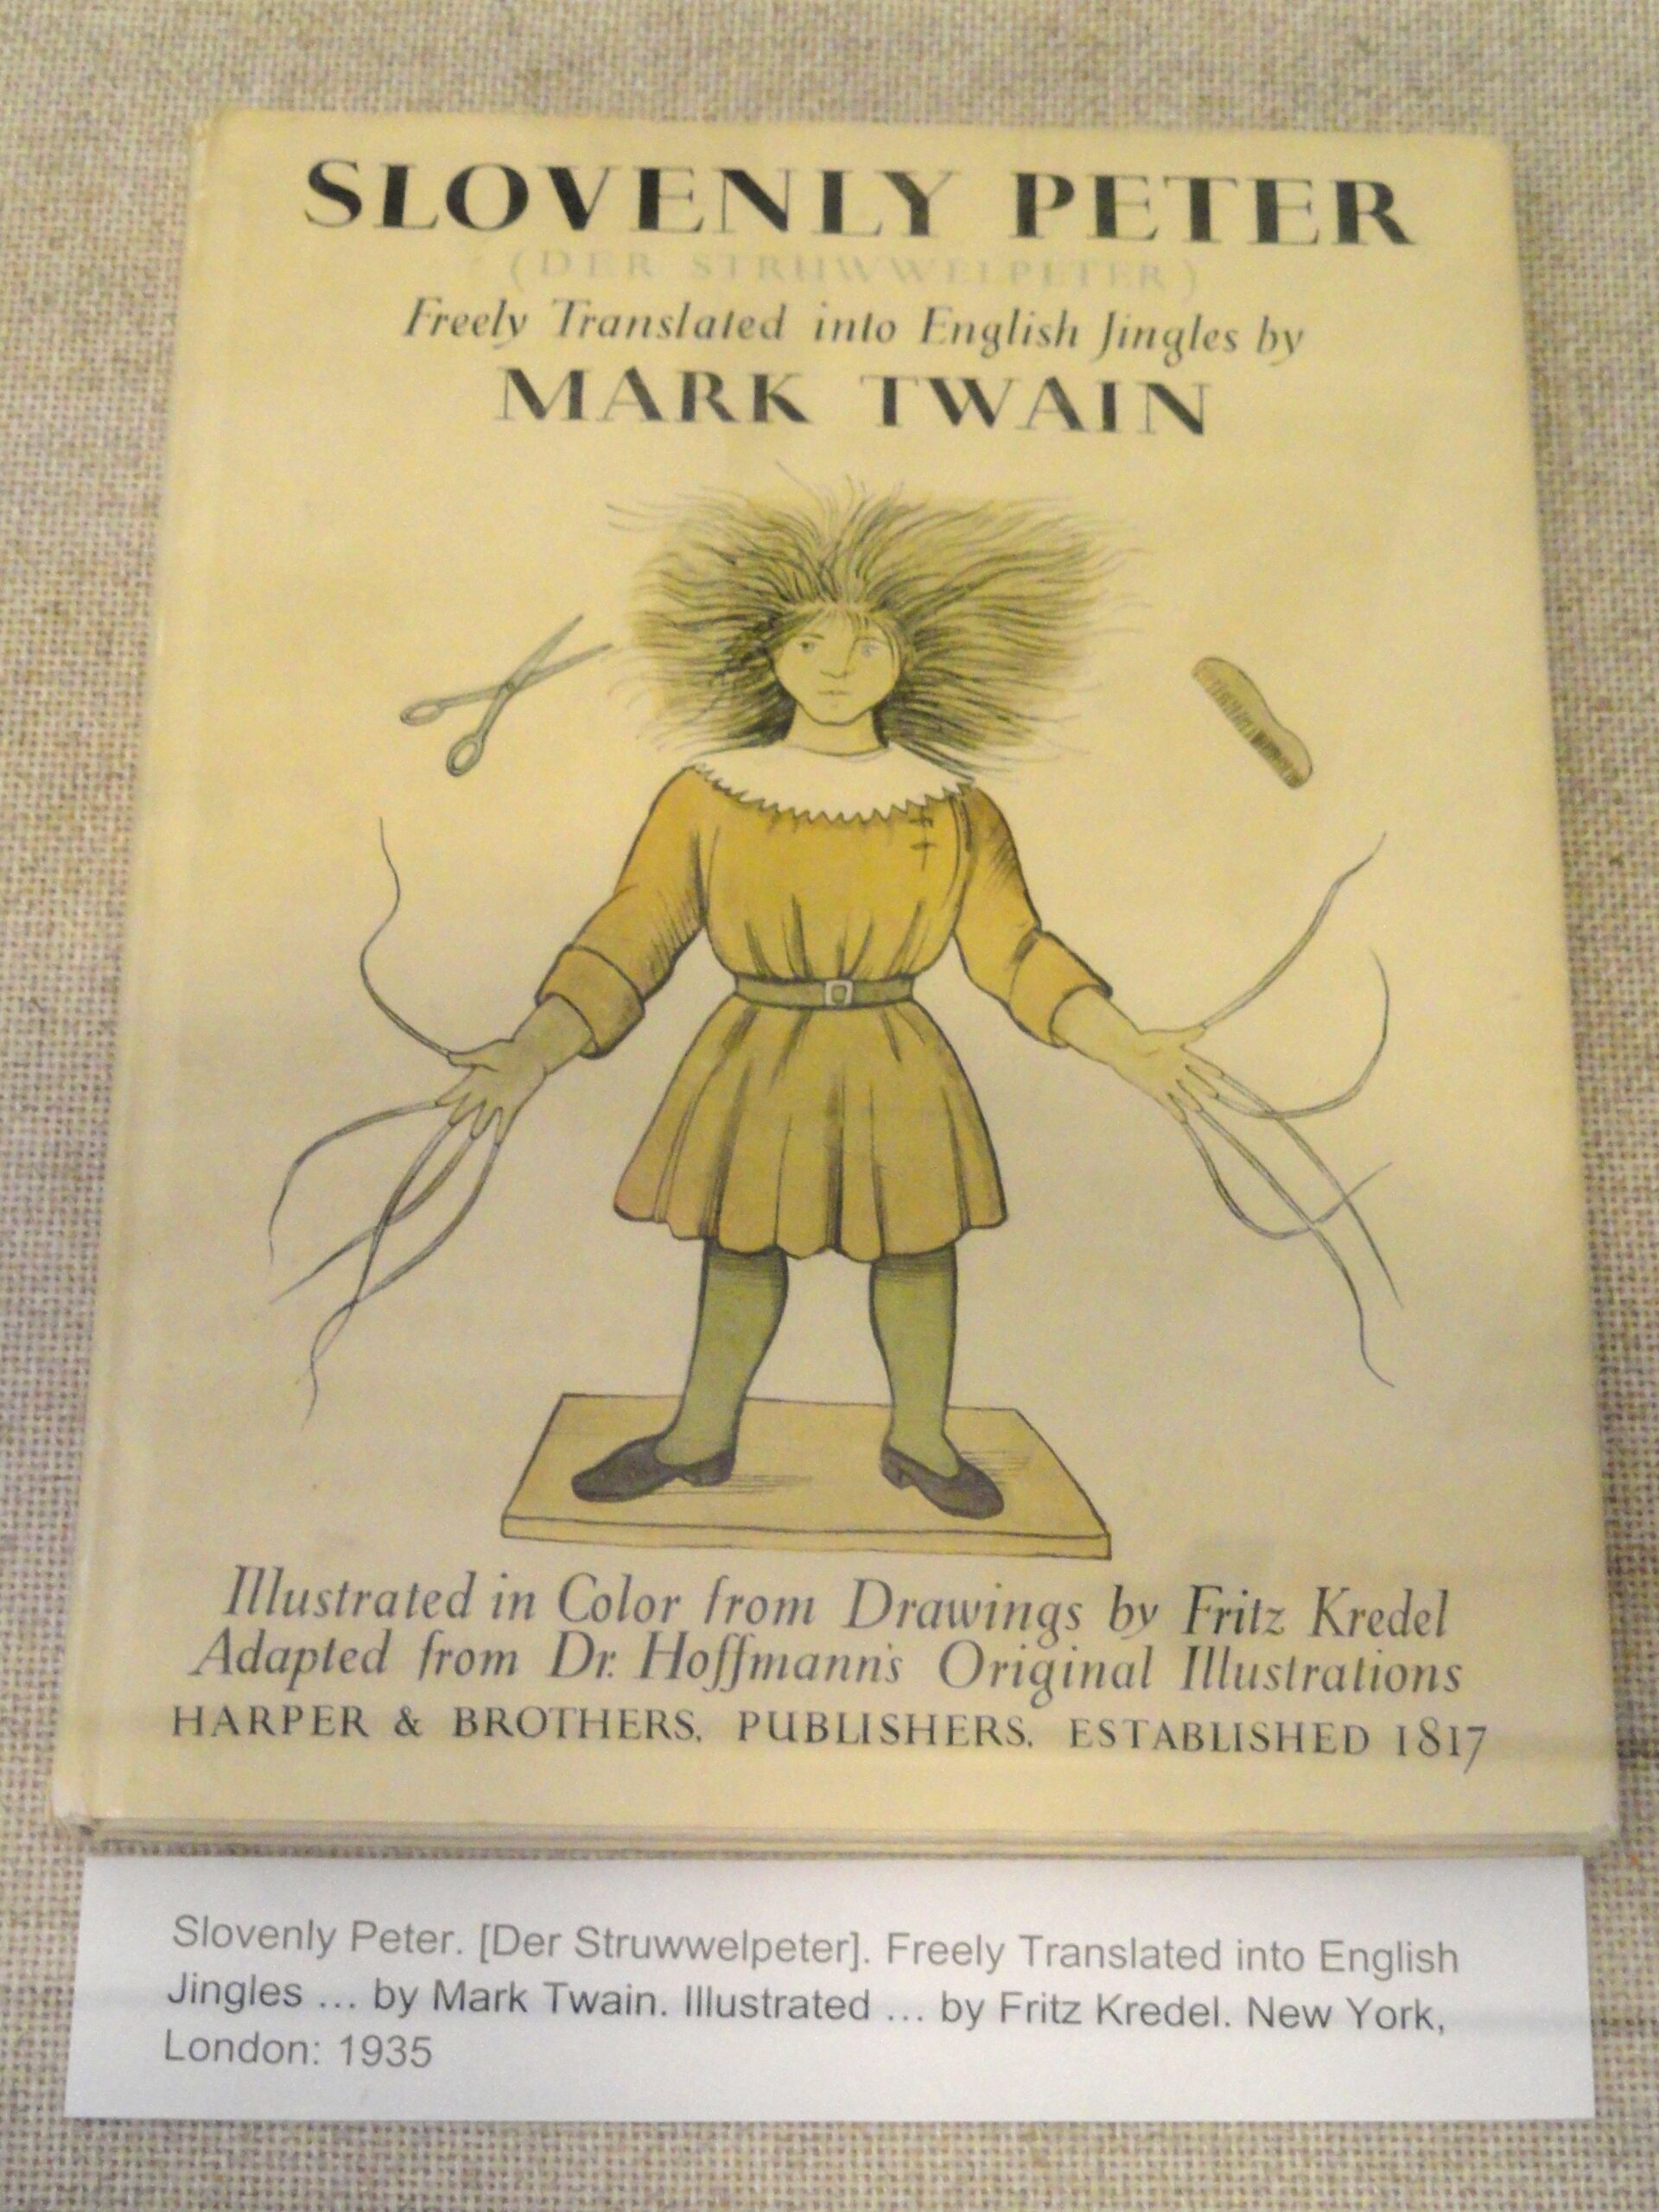 Cover of Mark Twain's translation of Der Struwwelpeter